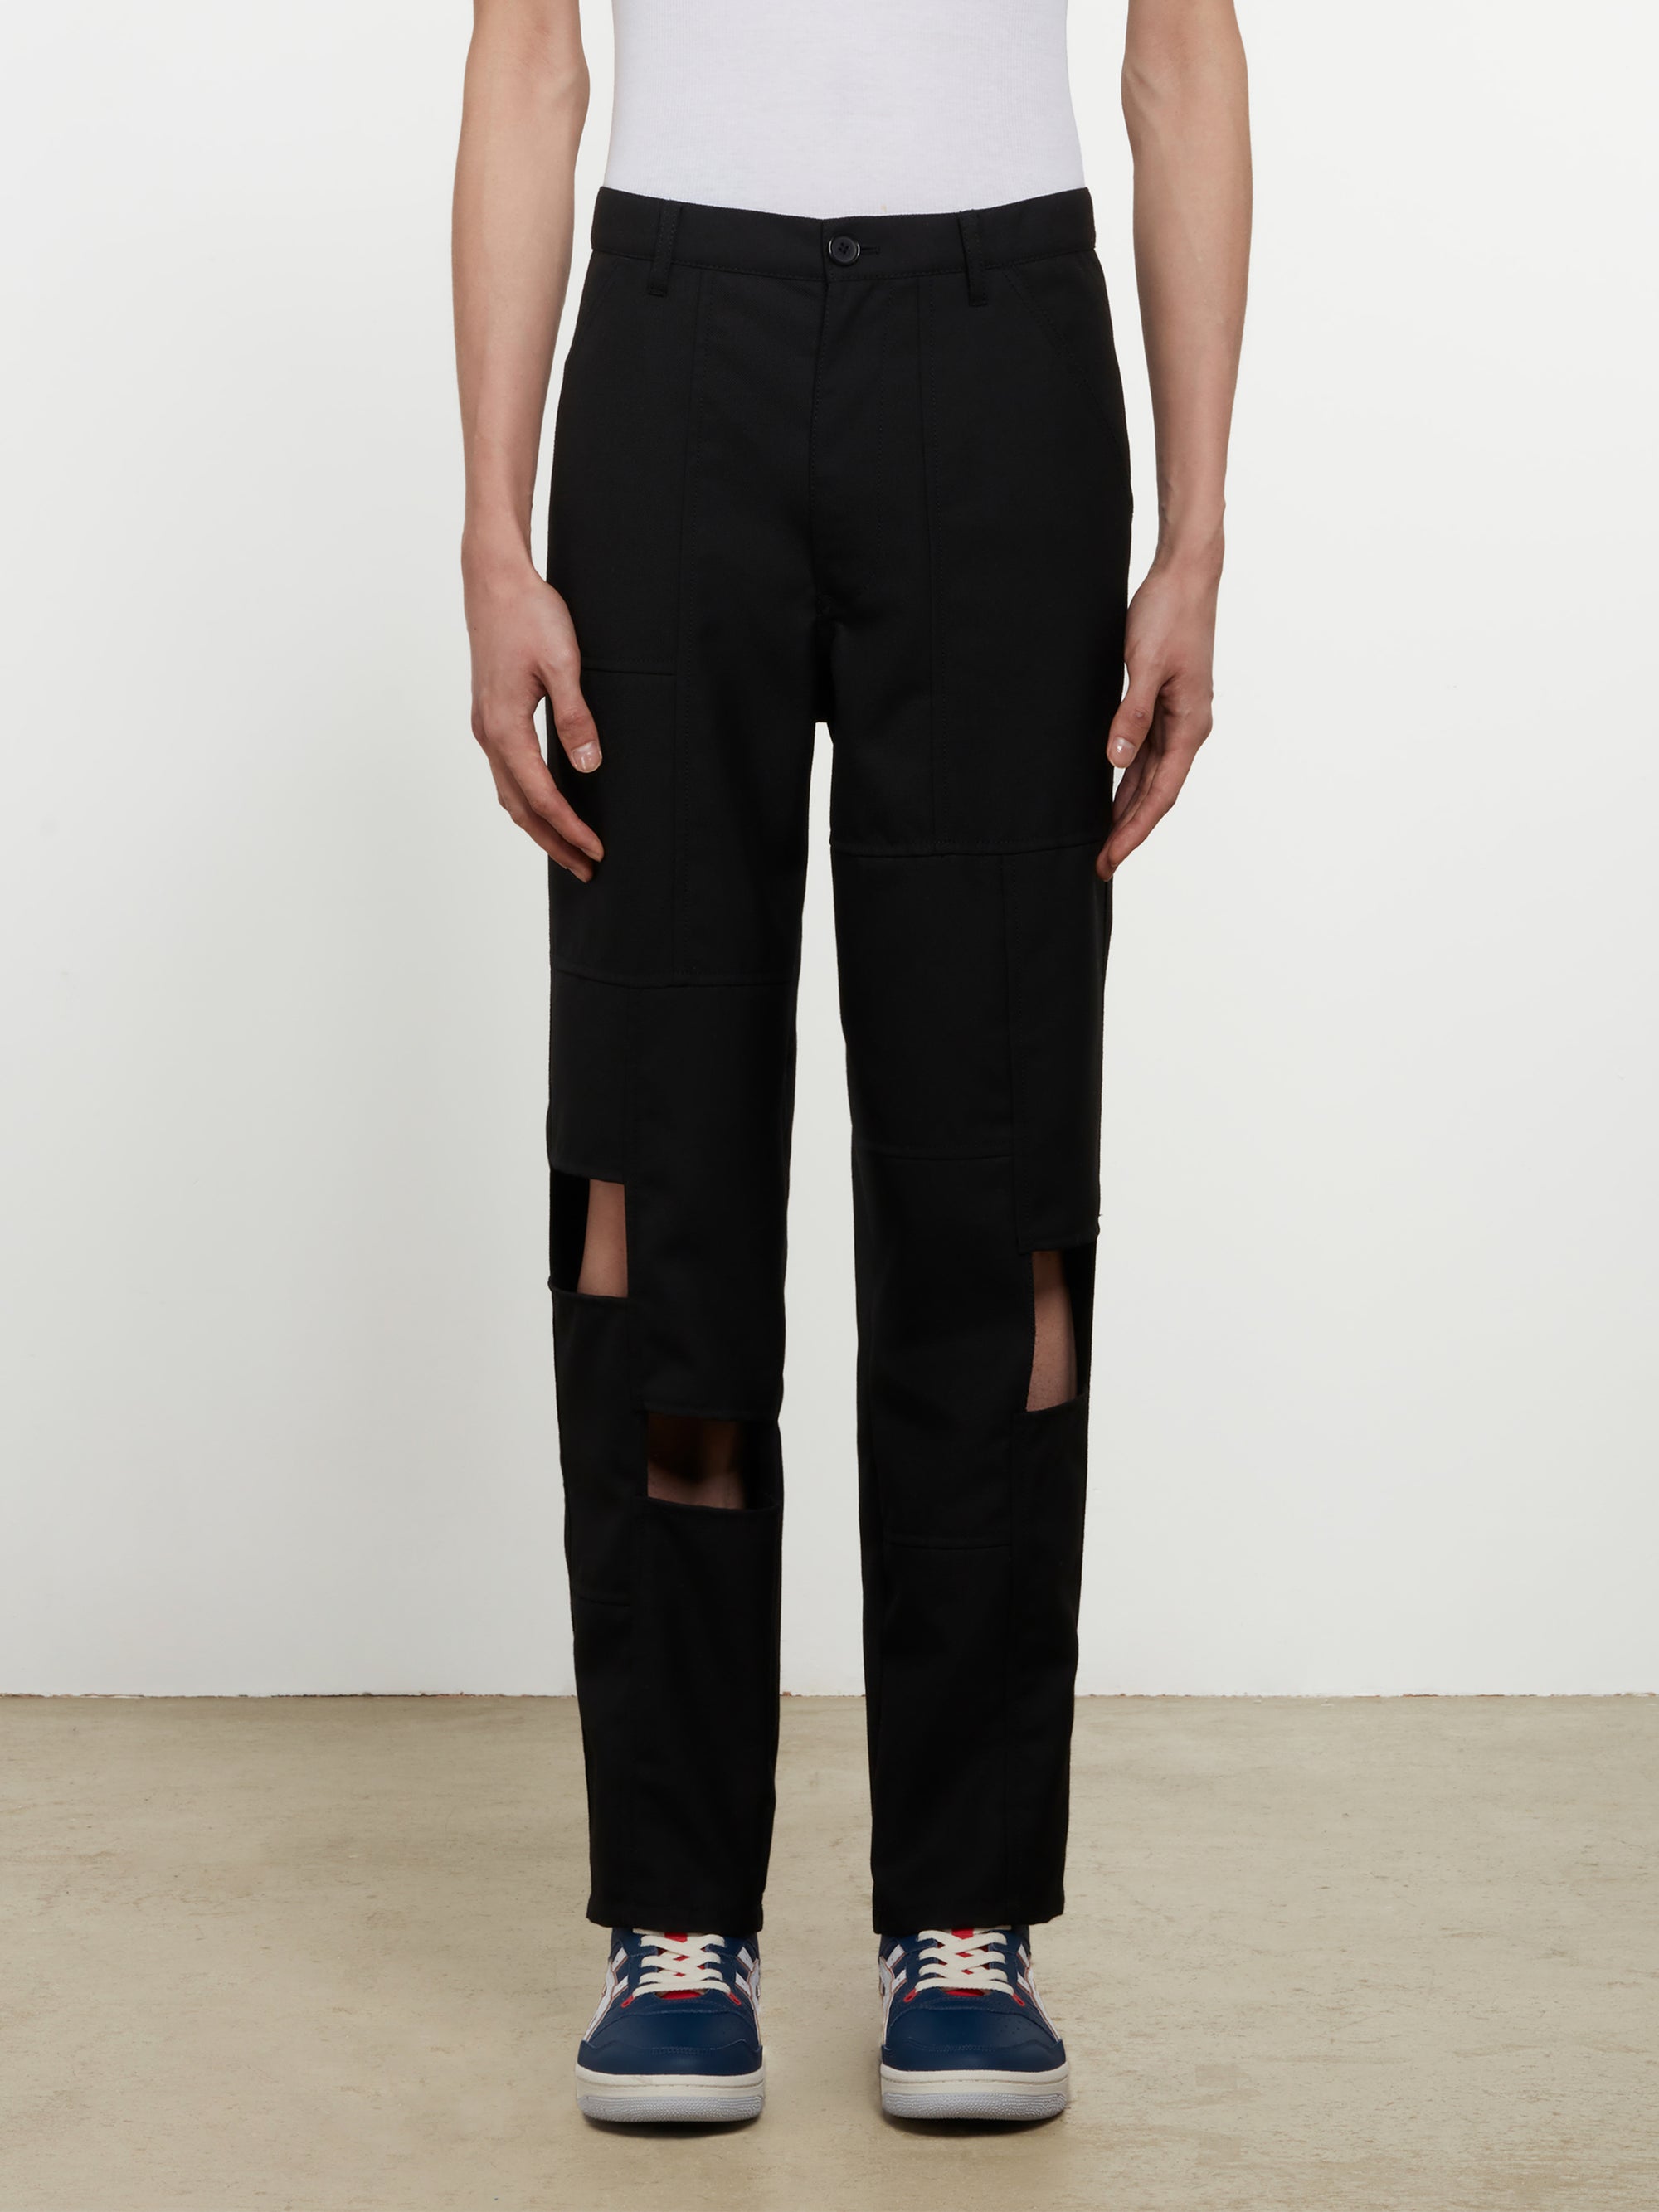 CDG Shirt - Men’s Panelled Pants - (Black) view 1